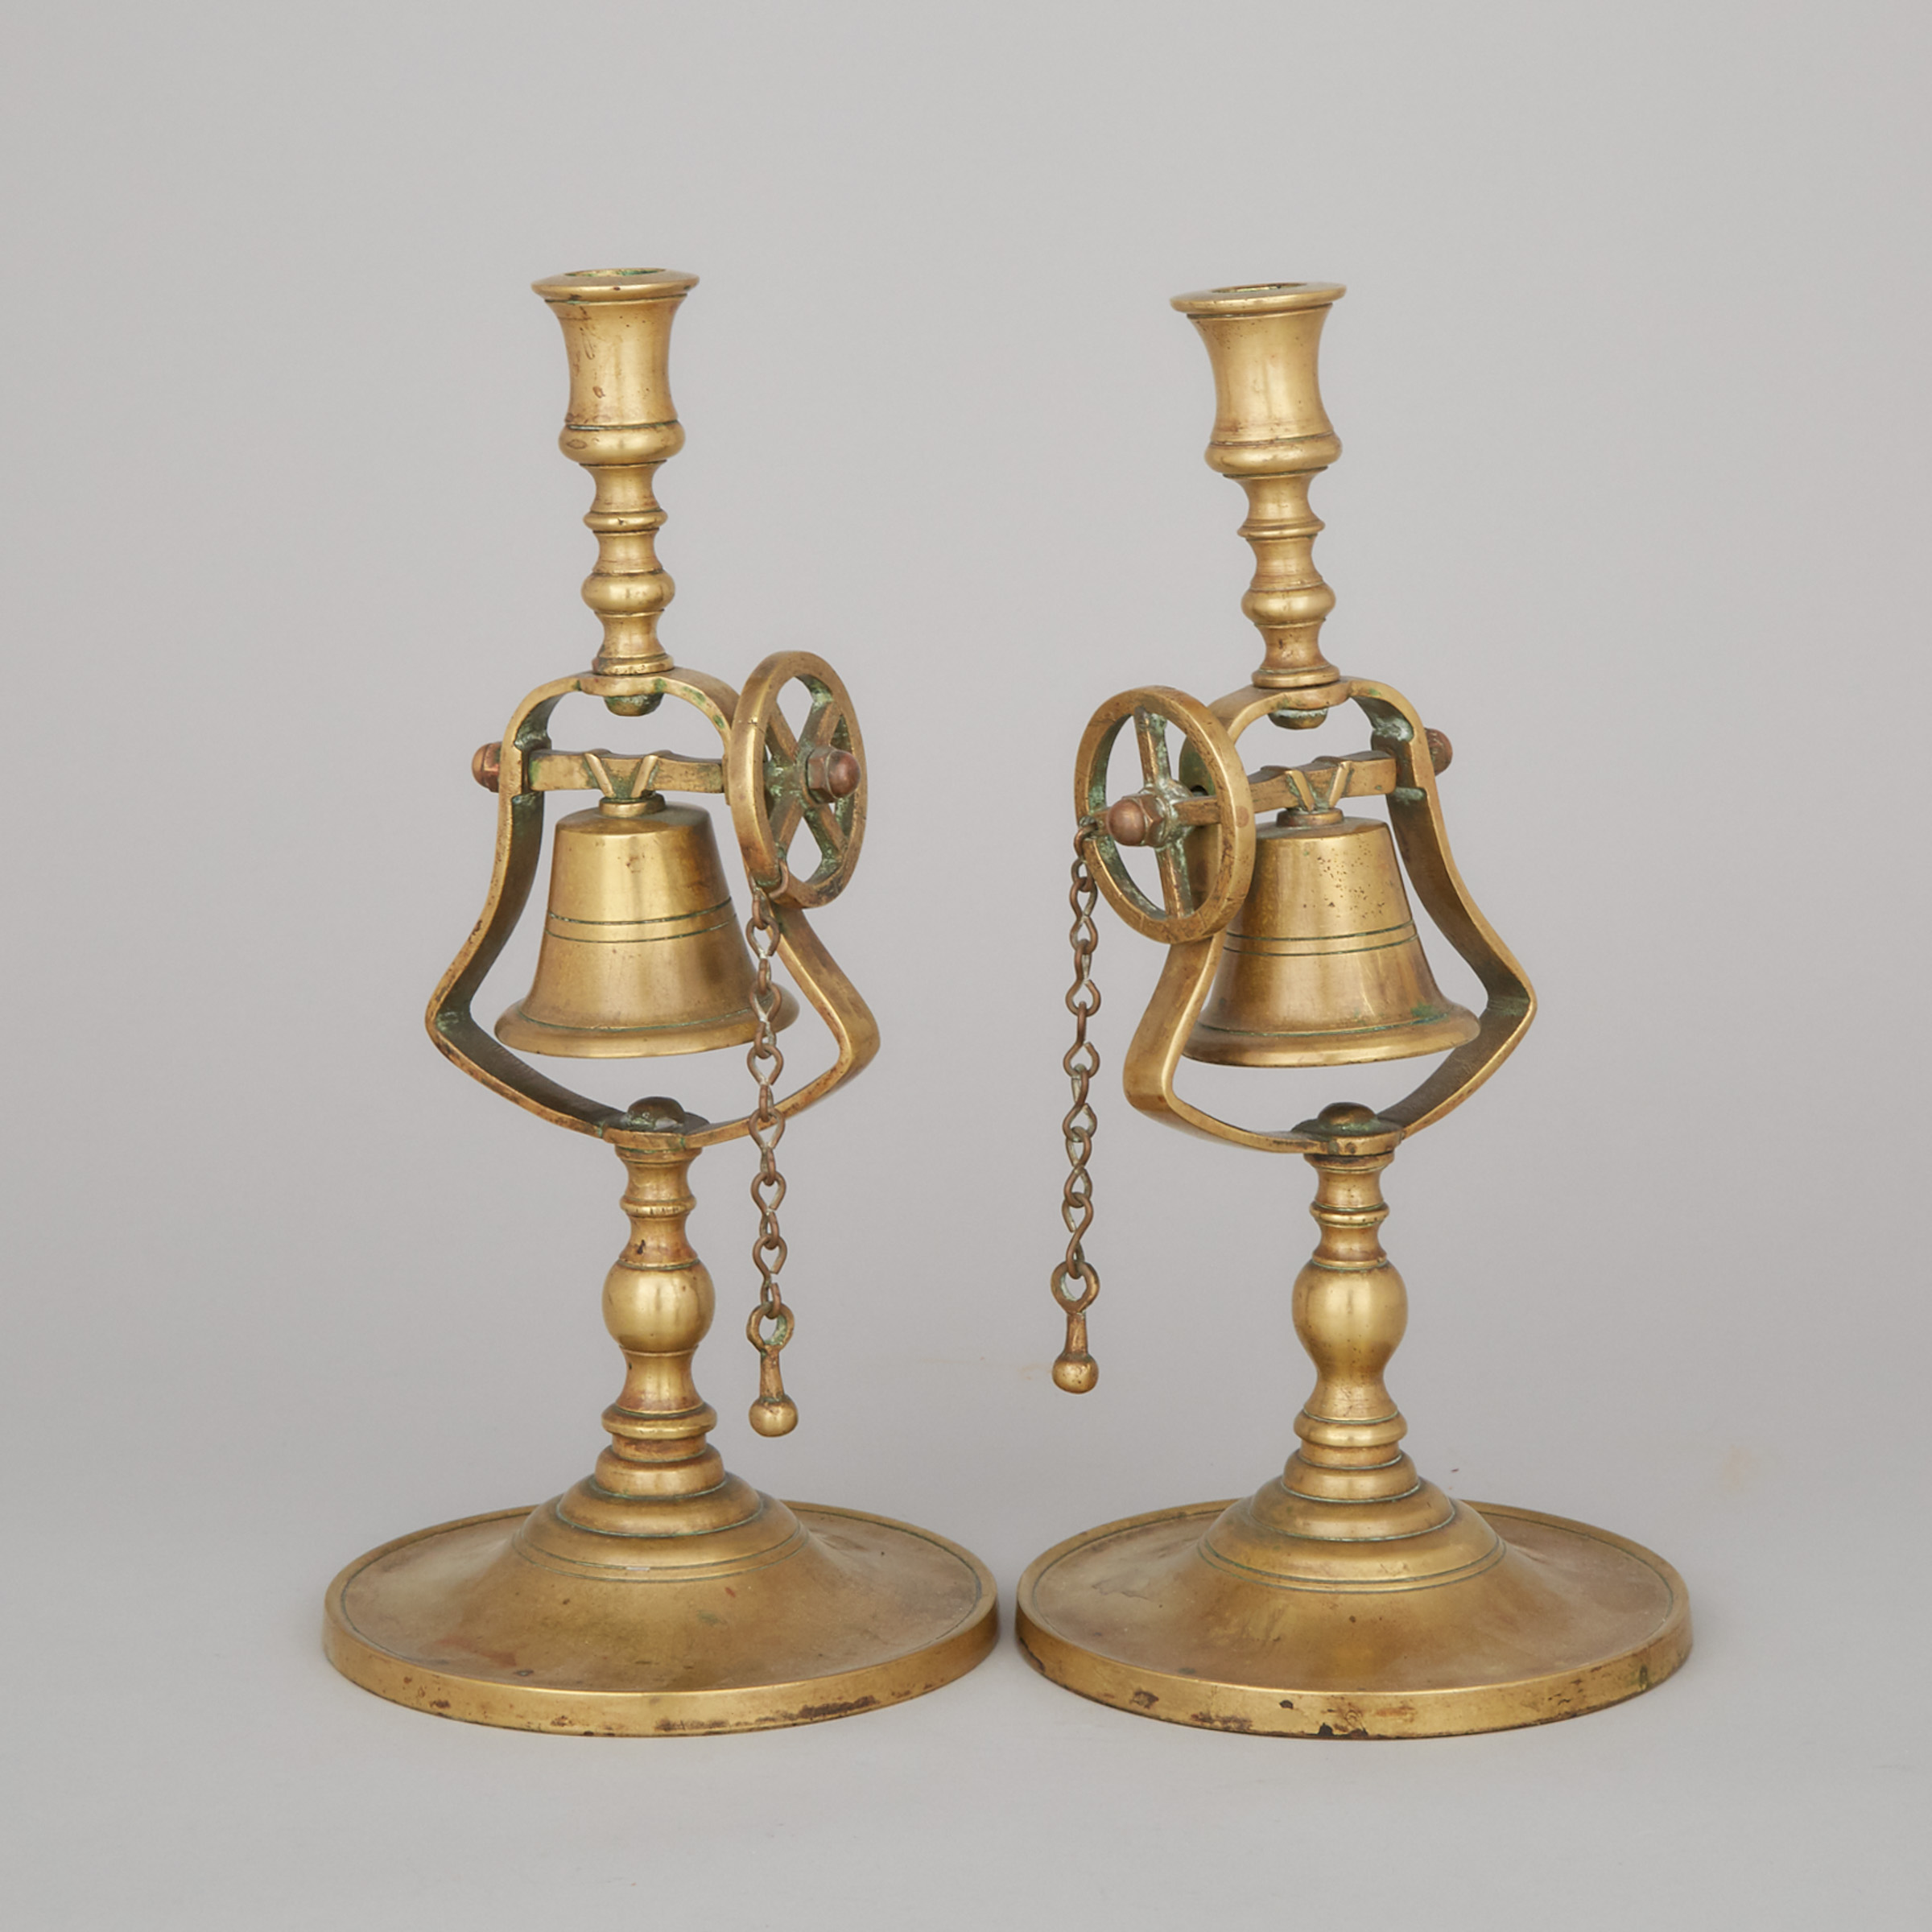 Pair of English Brass Tavern Candlesticks, early 19th century